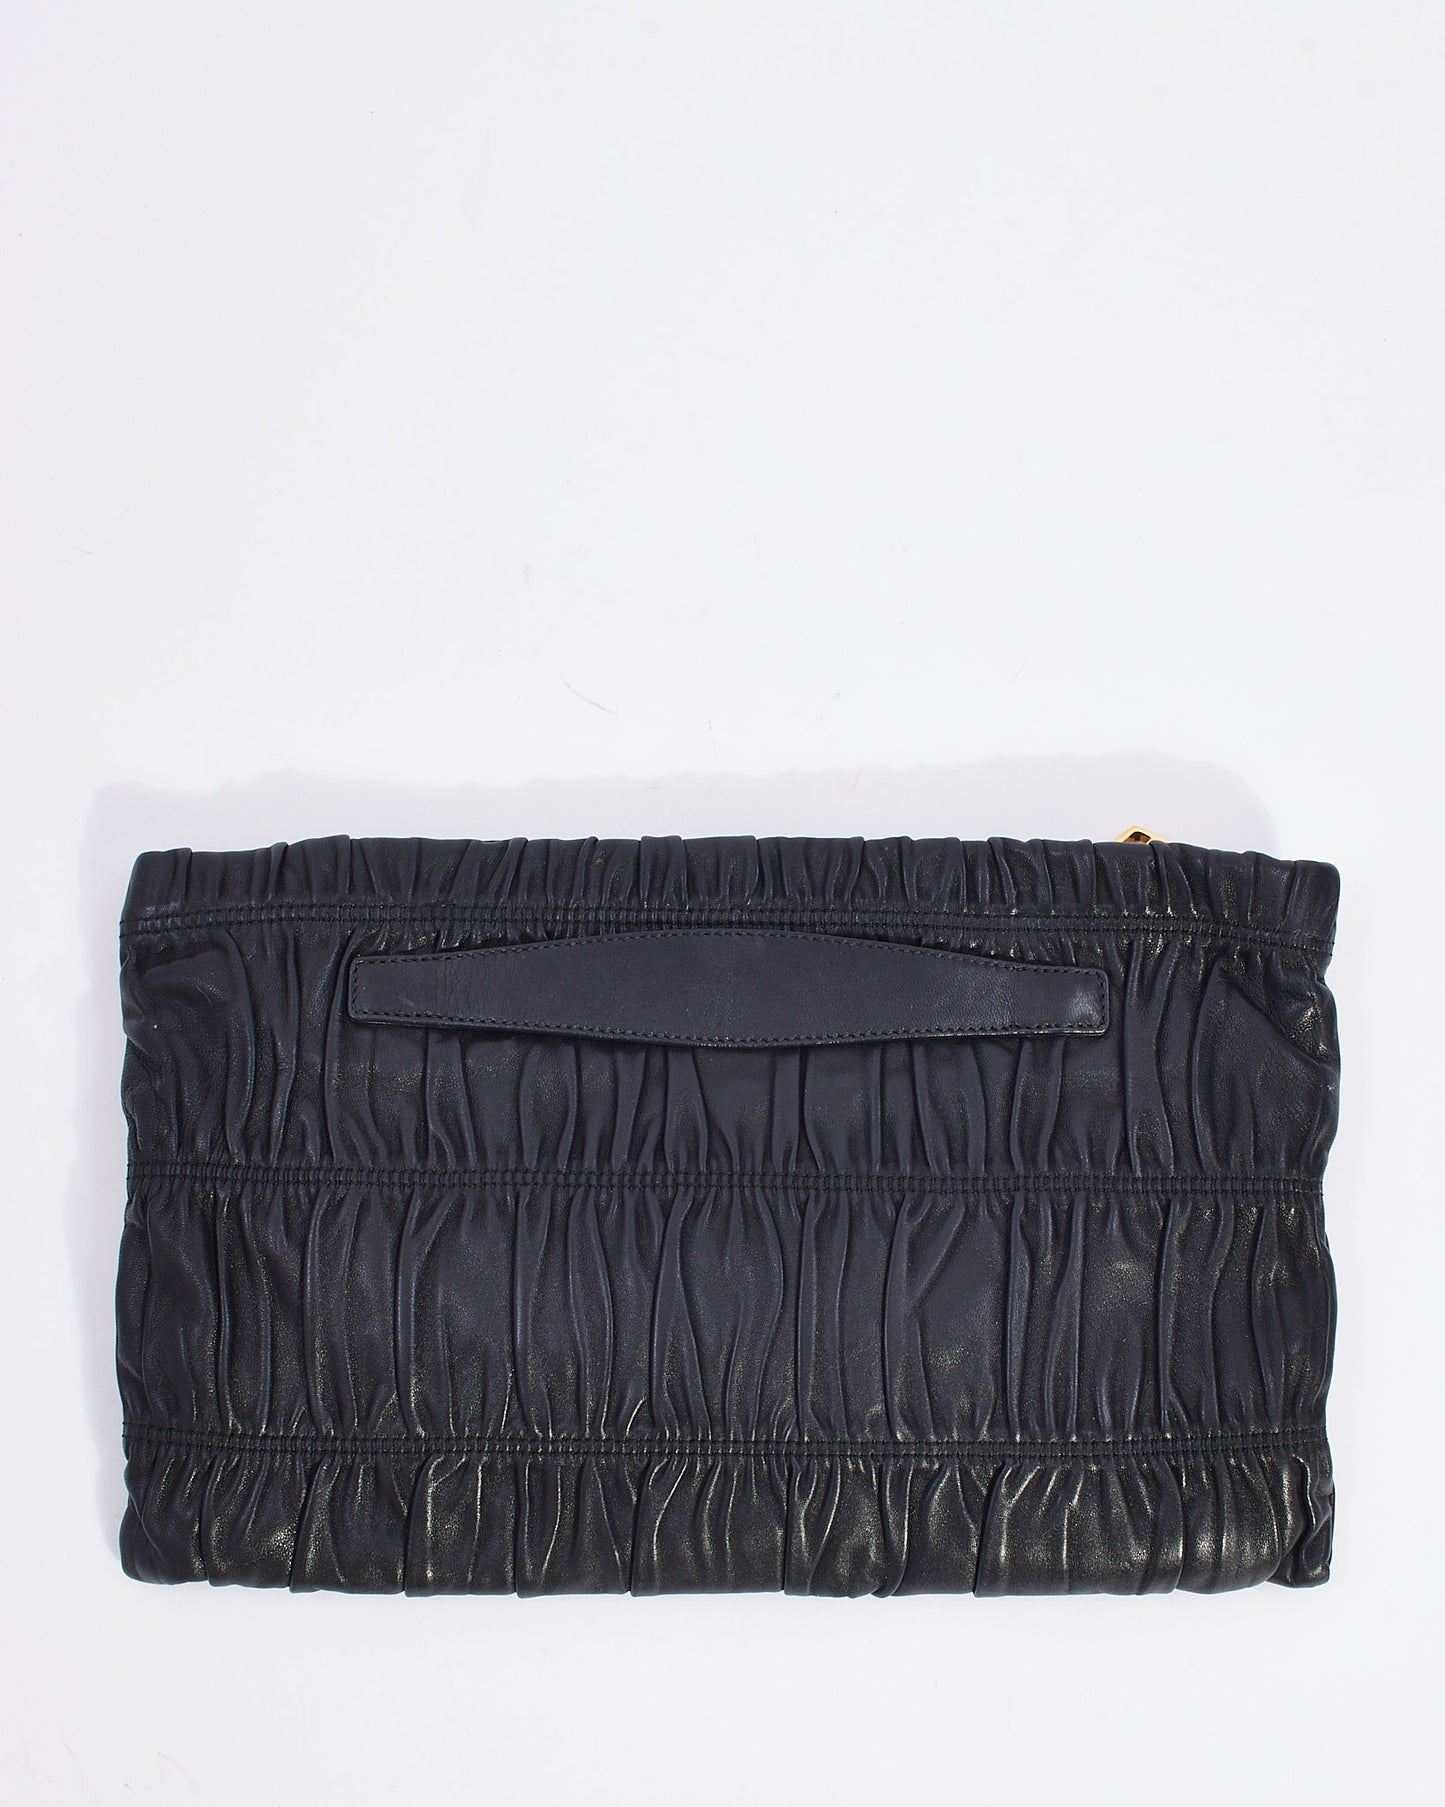 Prada Black Gaufre Leather Large Zip Clutch